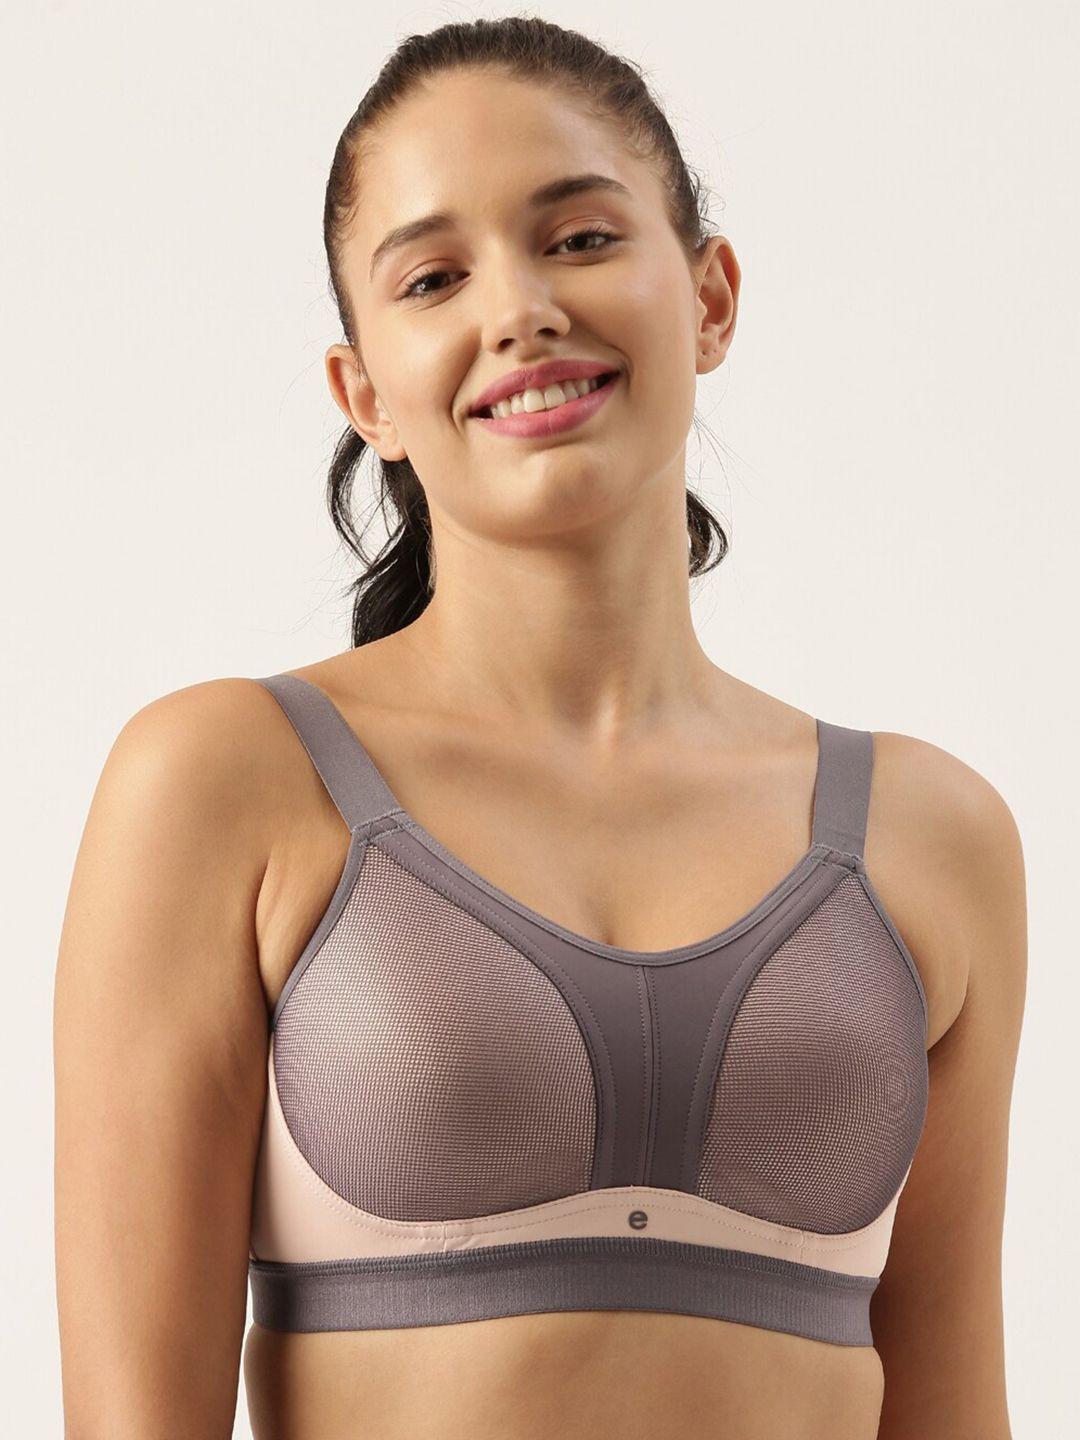 enamor grey & nude-coloured colourblocked workout bra lightly padded